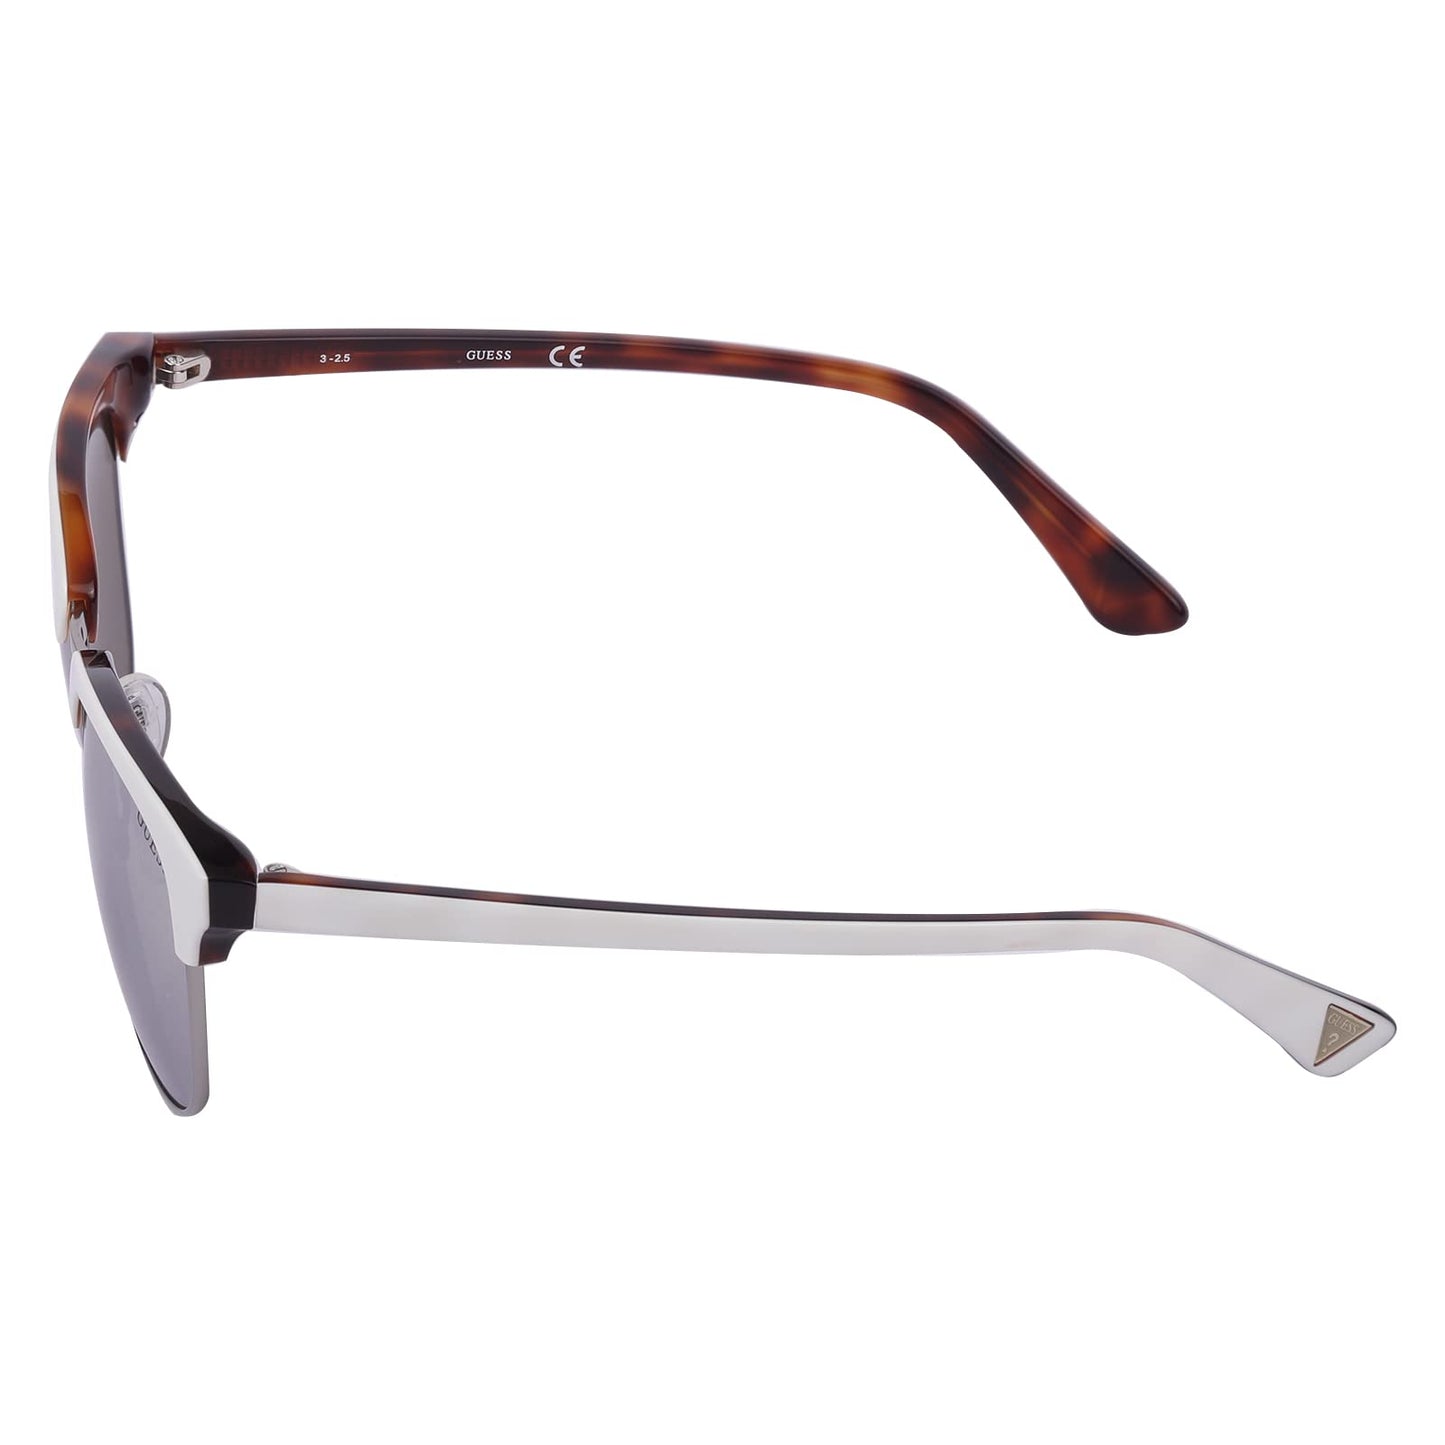 GUESS Gradient Browline/Clubmaster Unisex Sunglasses 7414 24C|51|Silver Color Lens